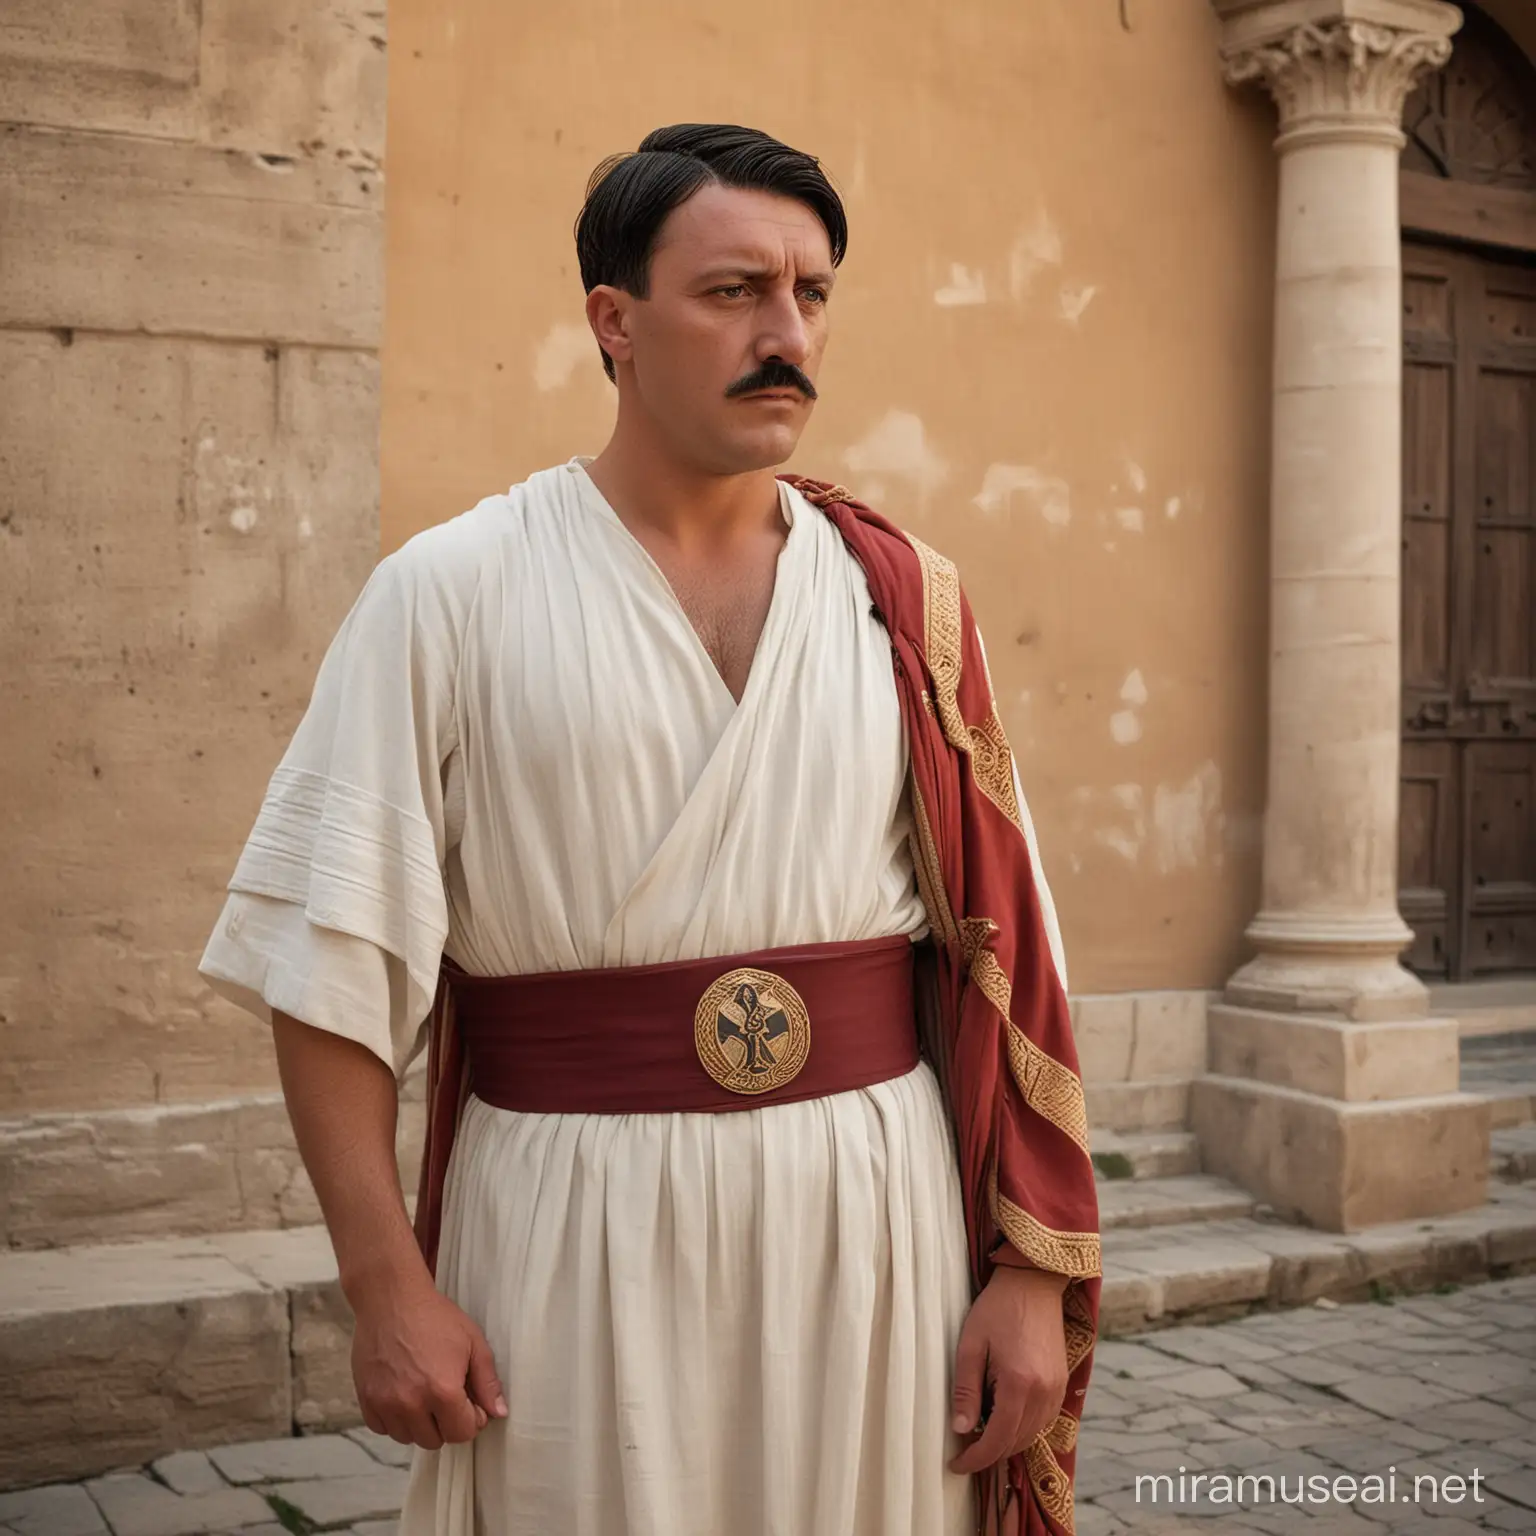 Medieval Style Senator Campaigning in Mediterranean City